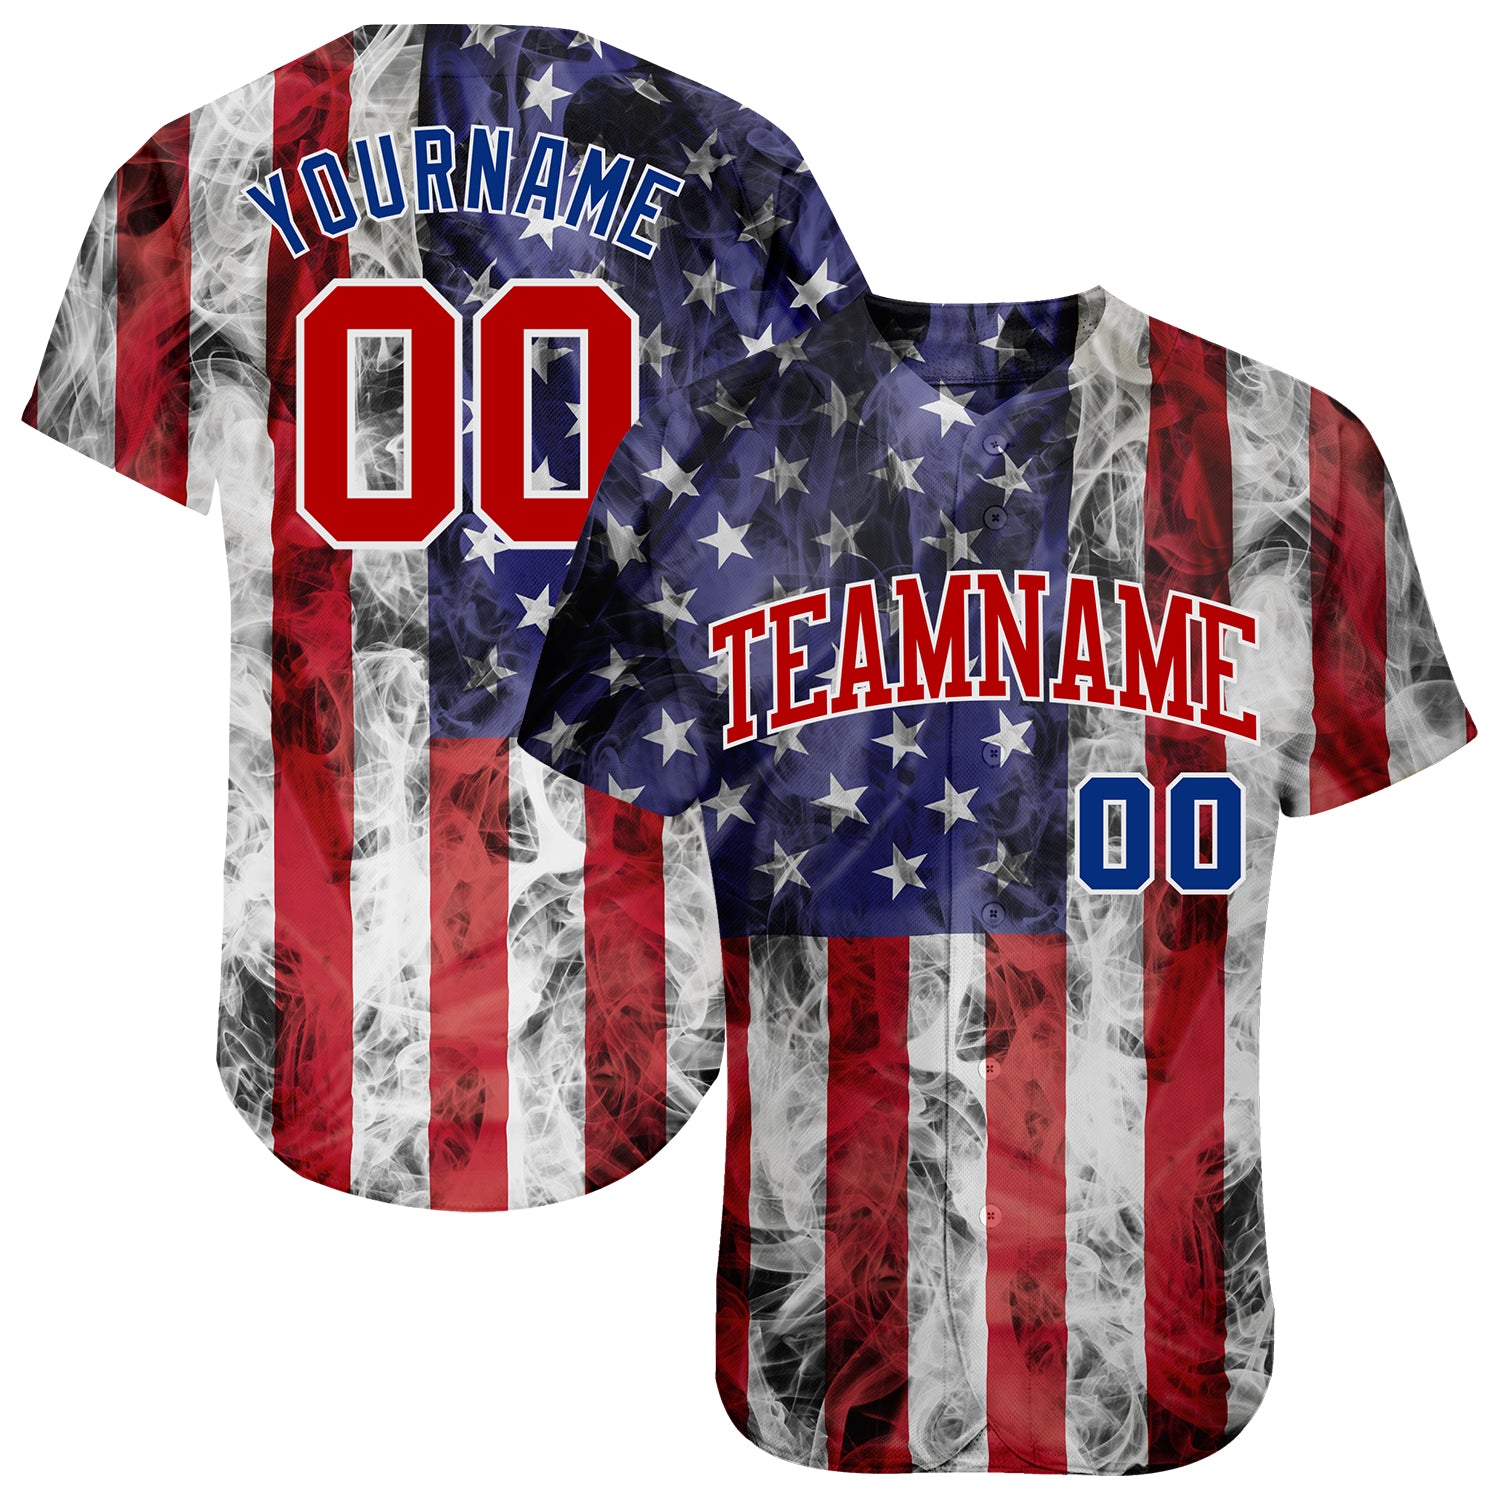  Red America 3D Baseball Jersey, Custom USA America 3D Pattern  Design Statue of Liberty Authentic Baseball Jersey